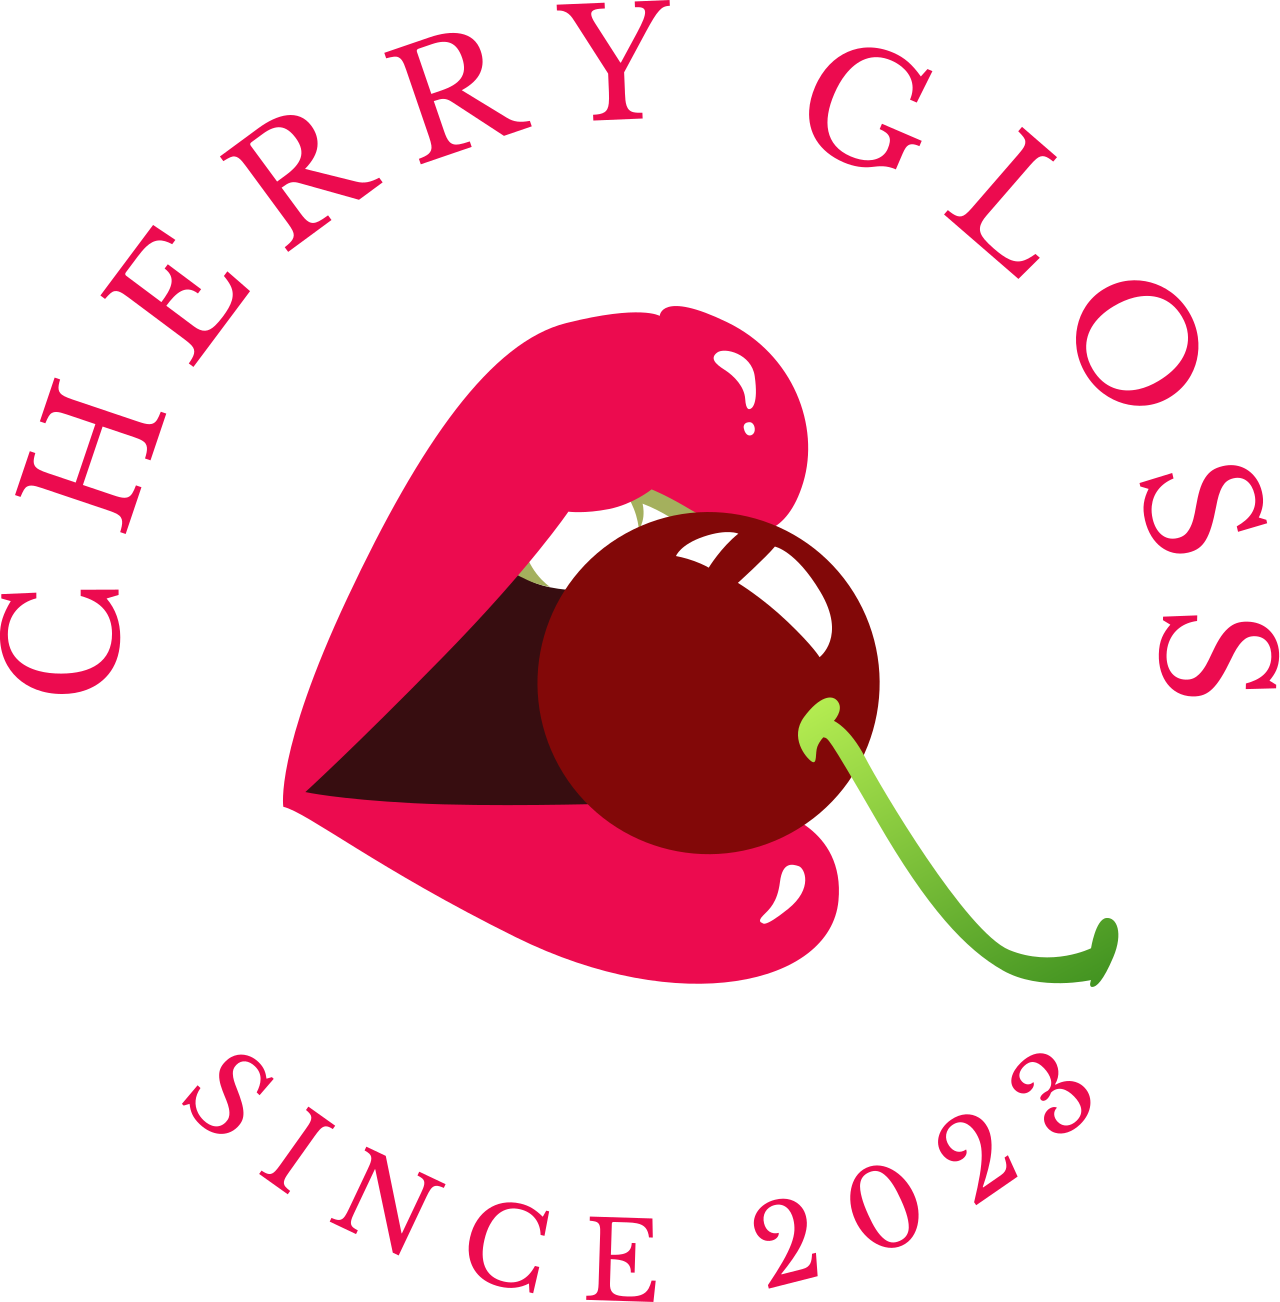 CHERRY GLOSS's web page